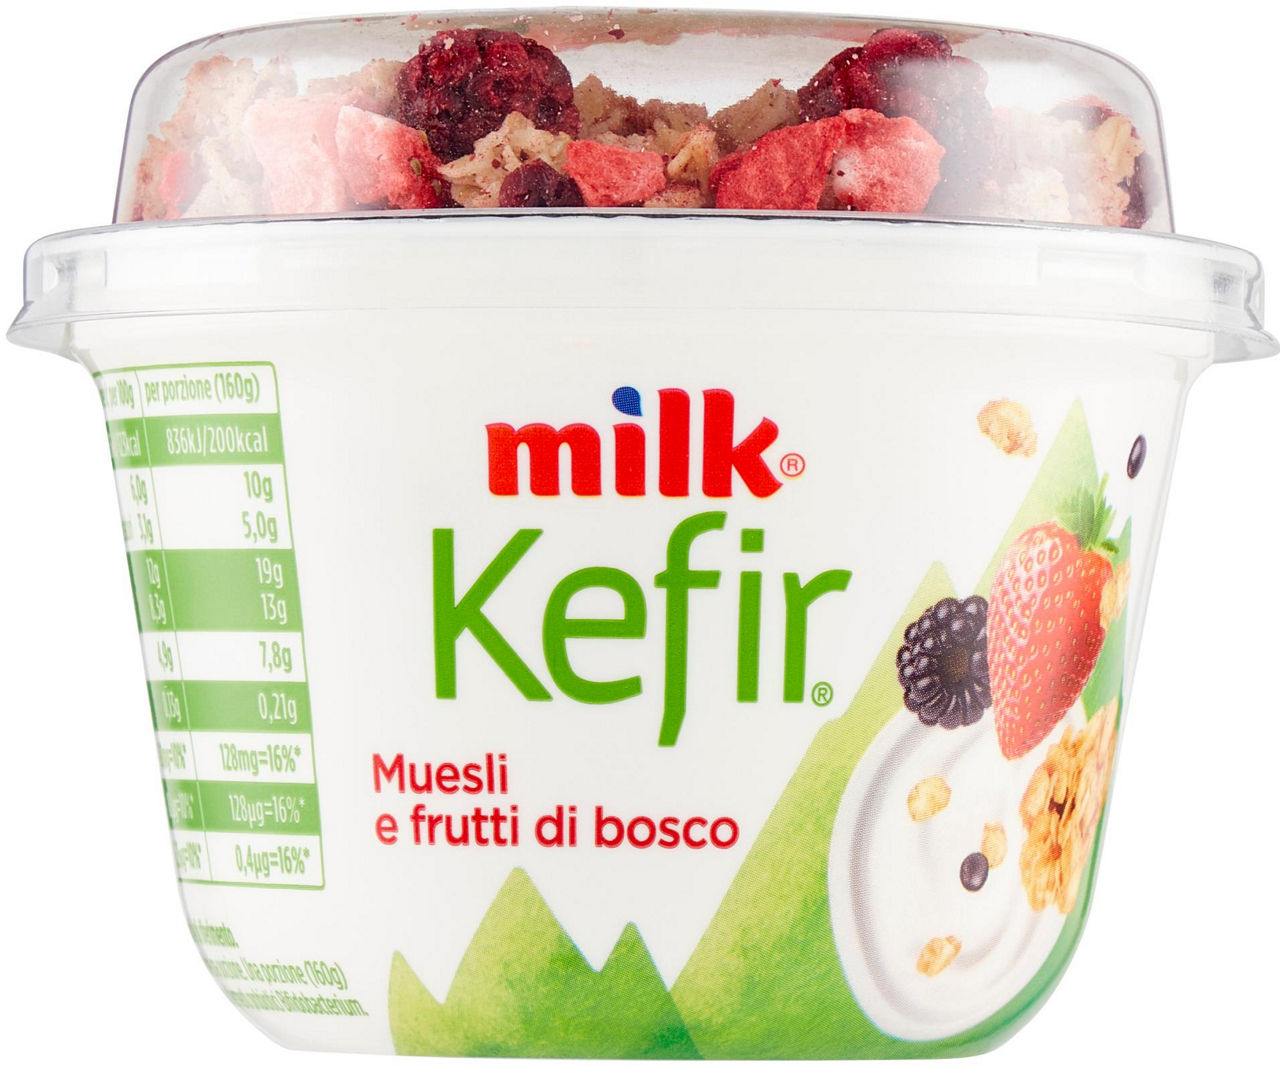 Milk kefir mix croccante ai frutti di bosco g 160